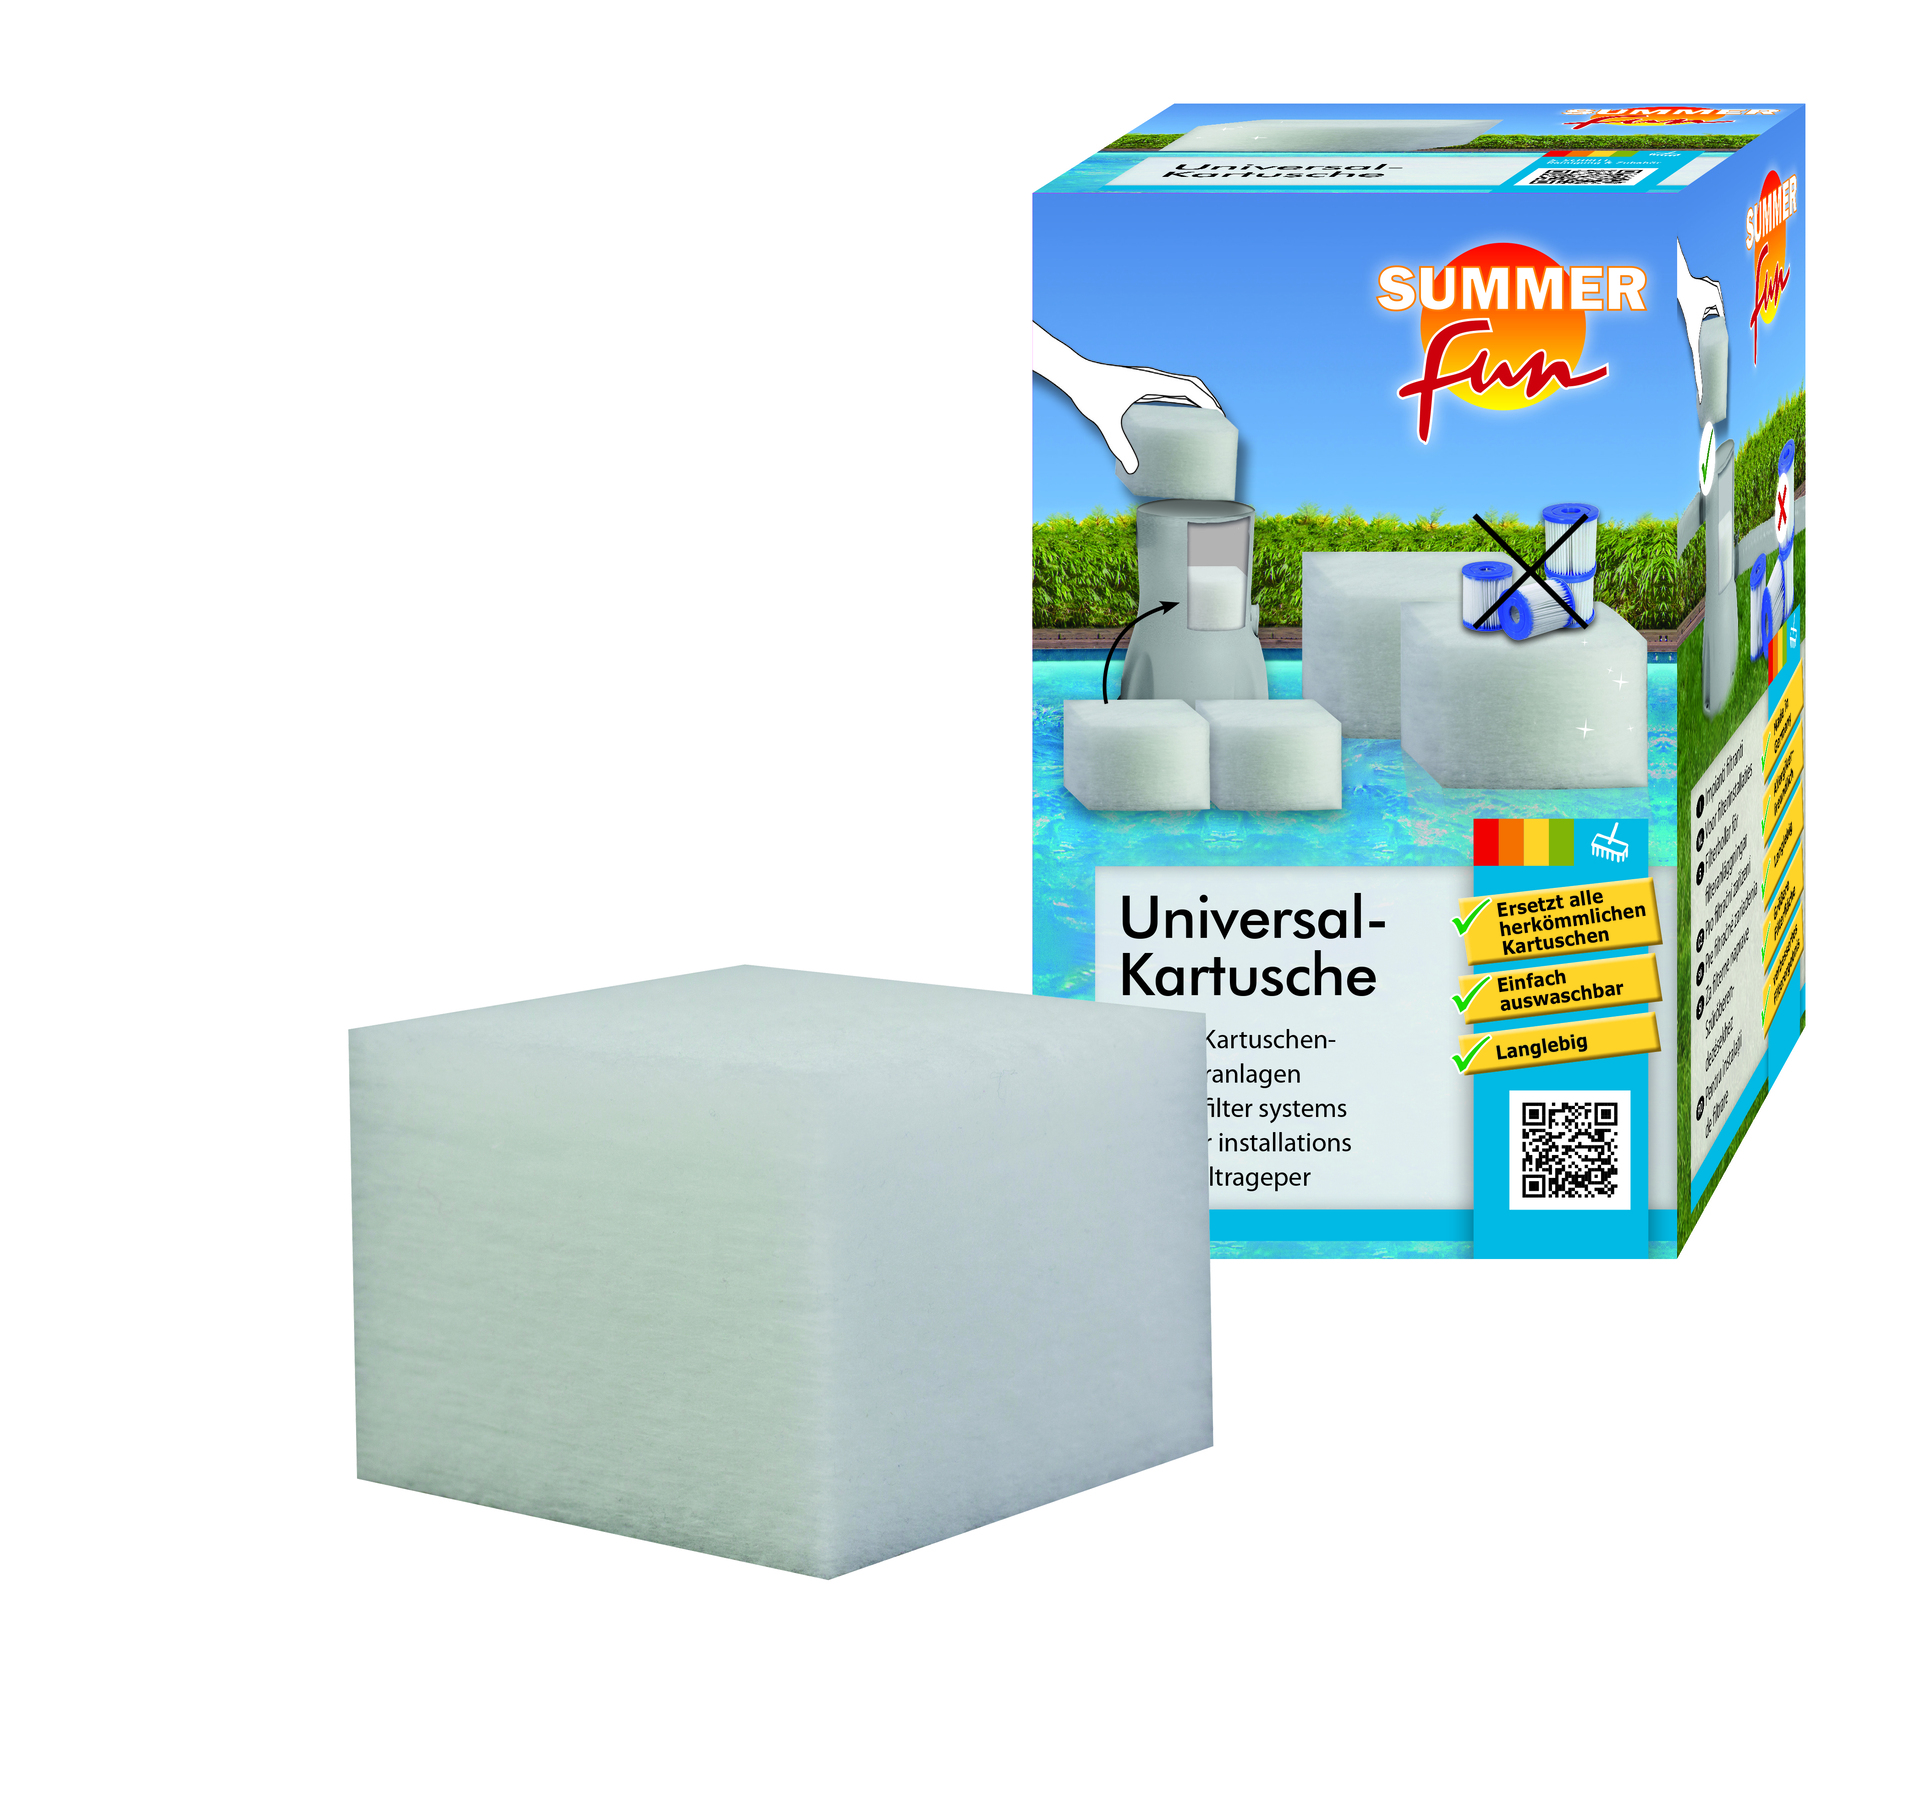 Universal-Kartusche Cube